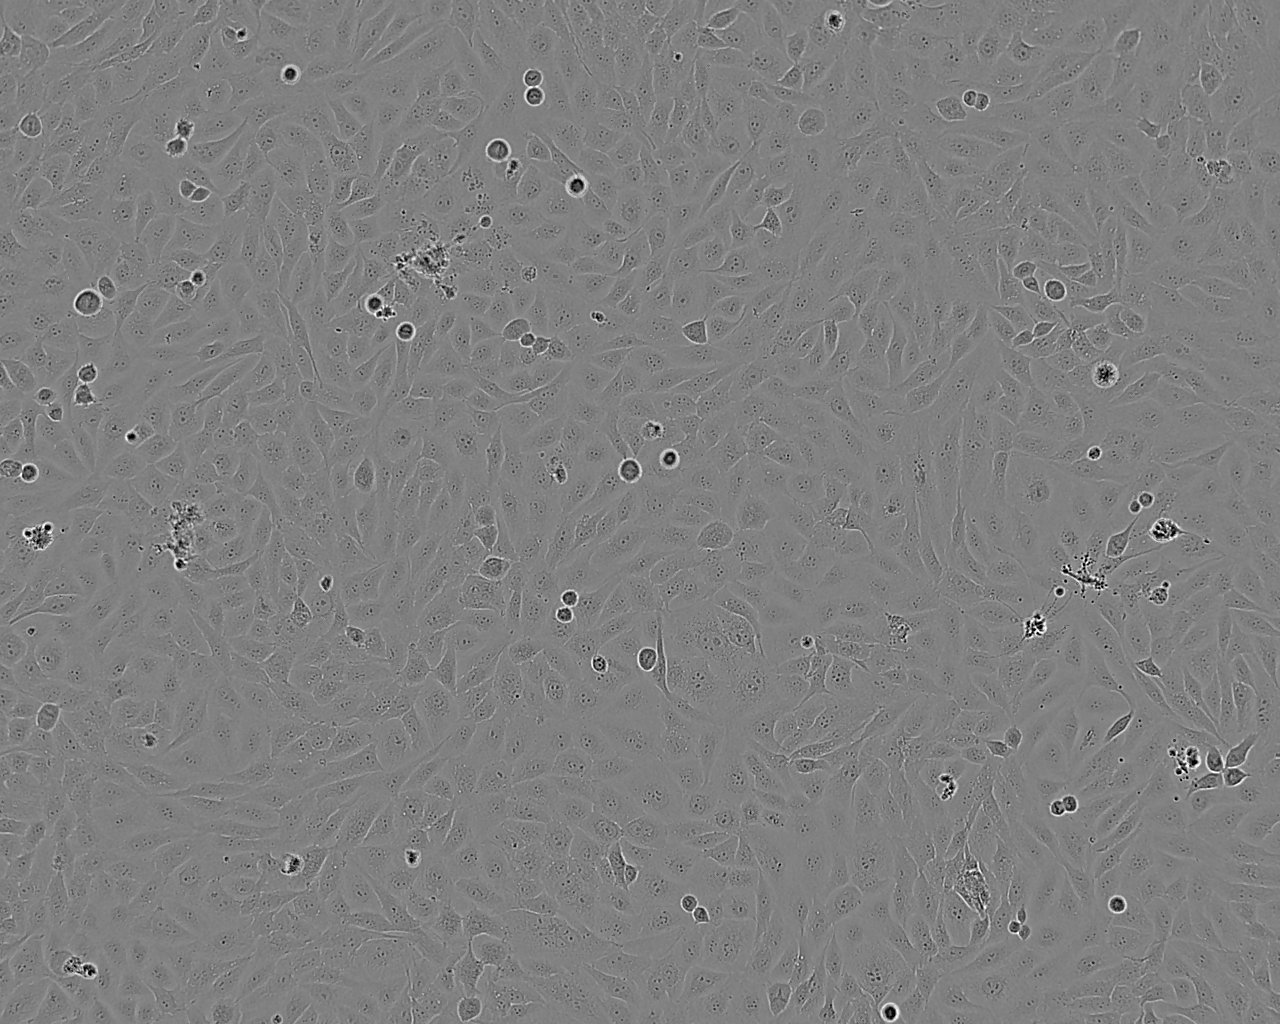 SNU-1 epithelioid cells人胃癌细胞系,SNU-1 epithelioid cells